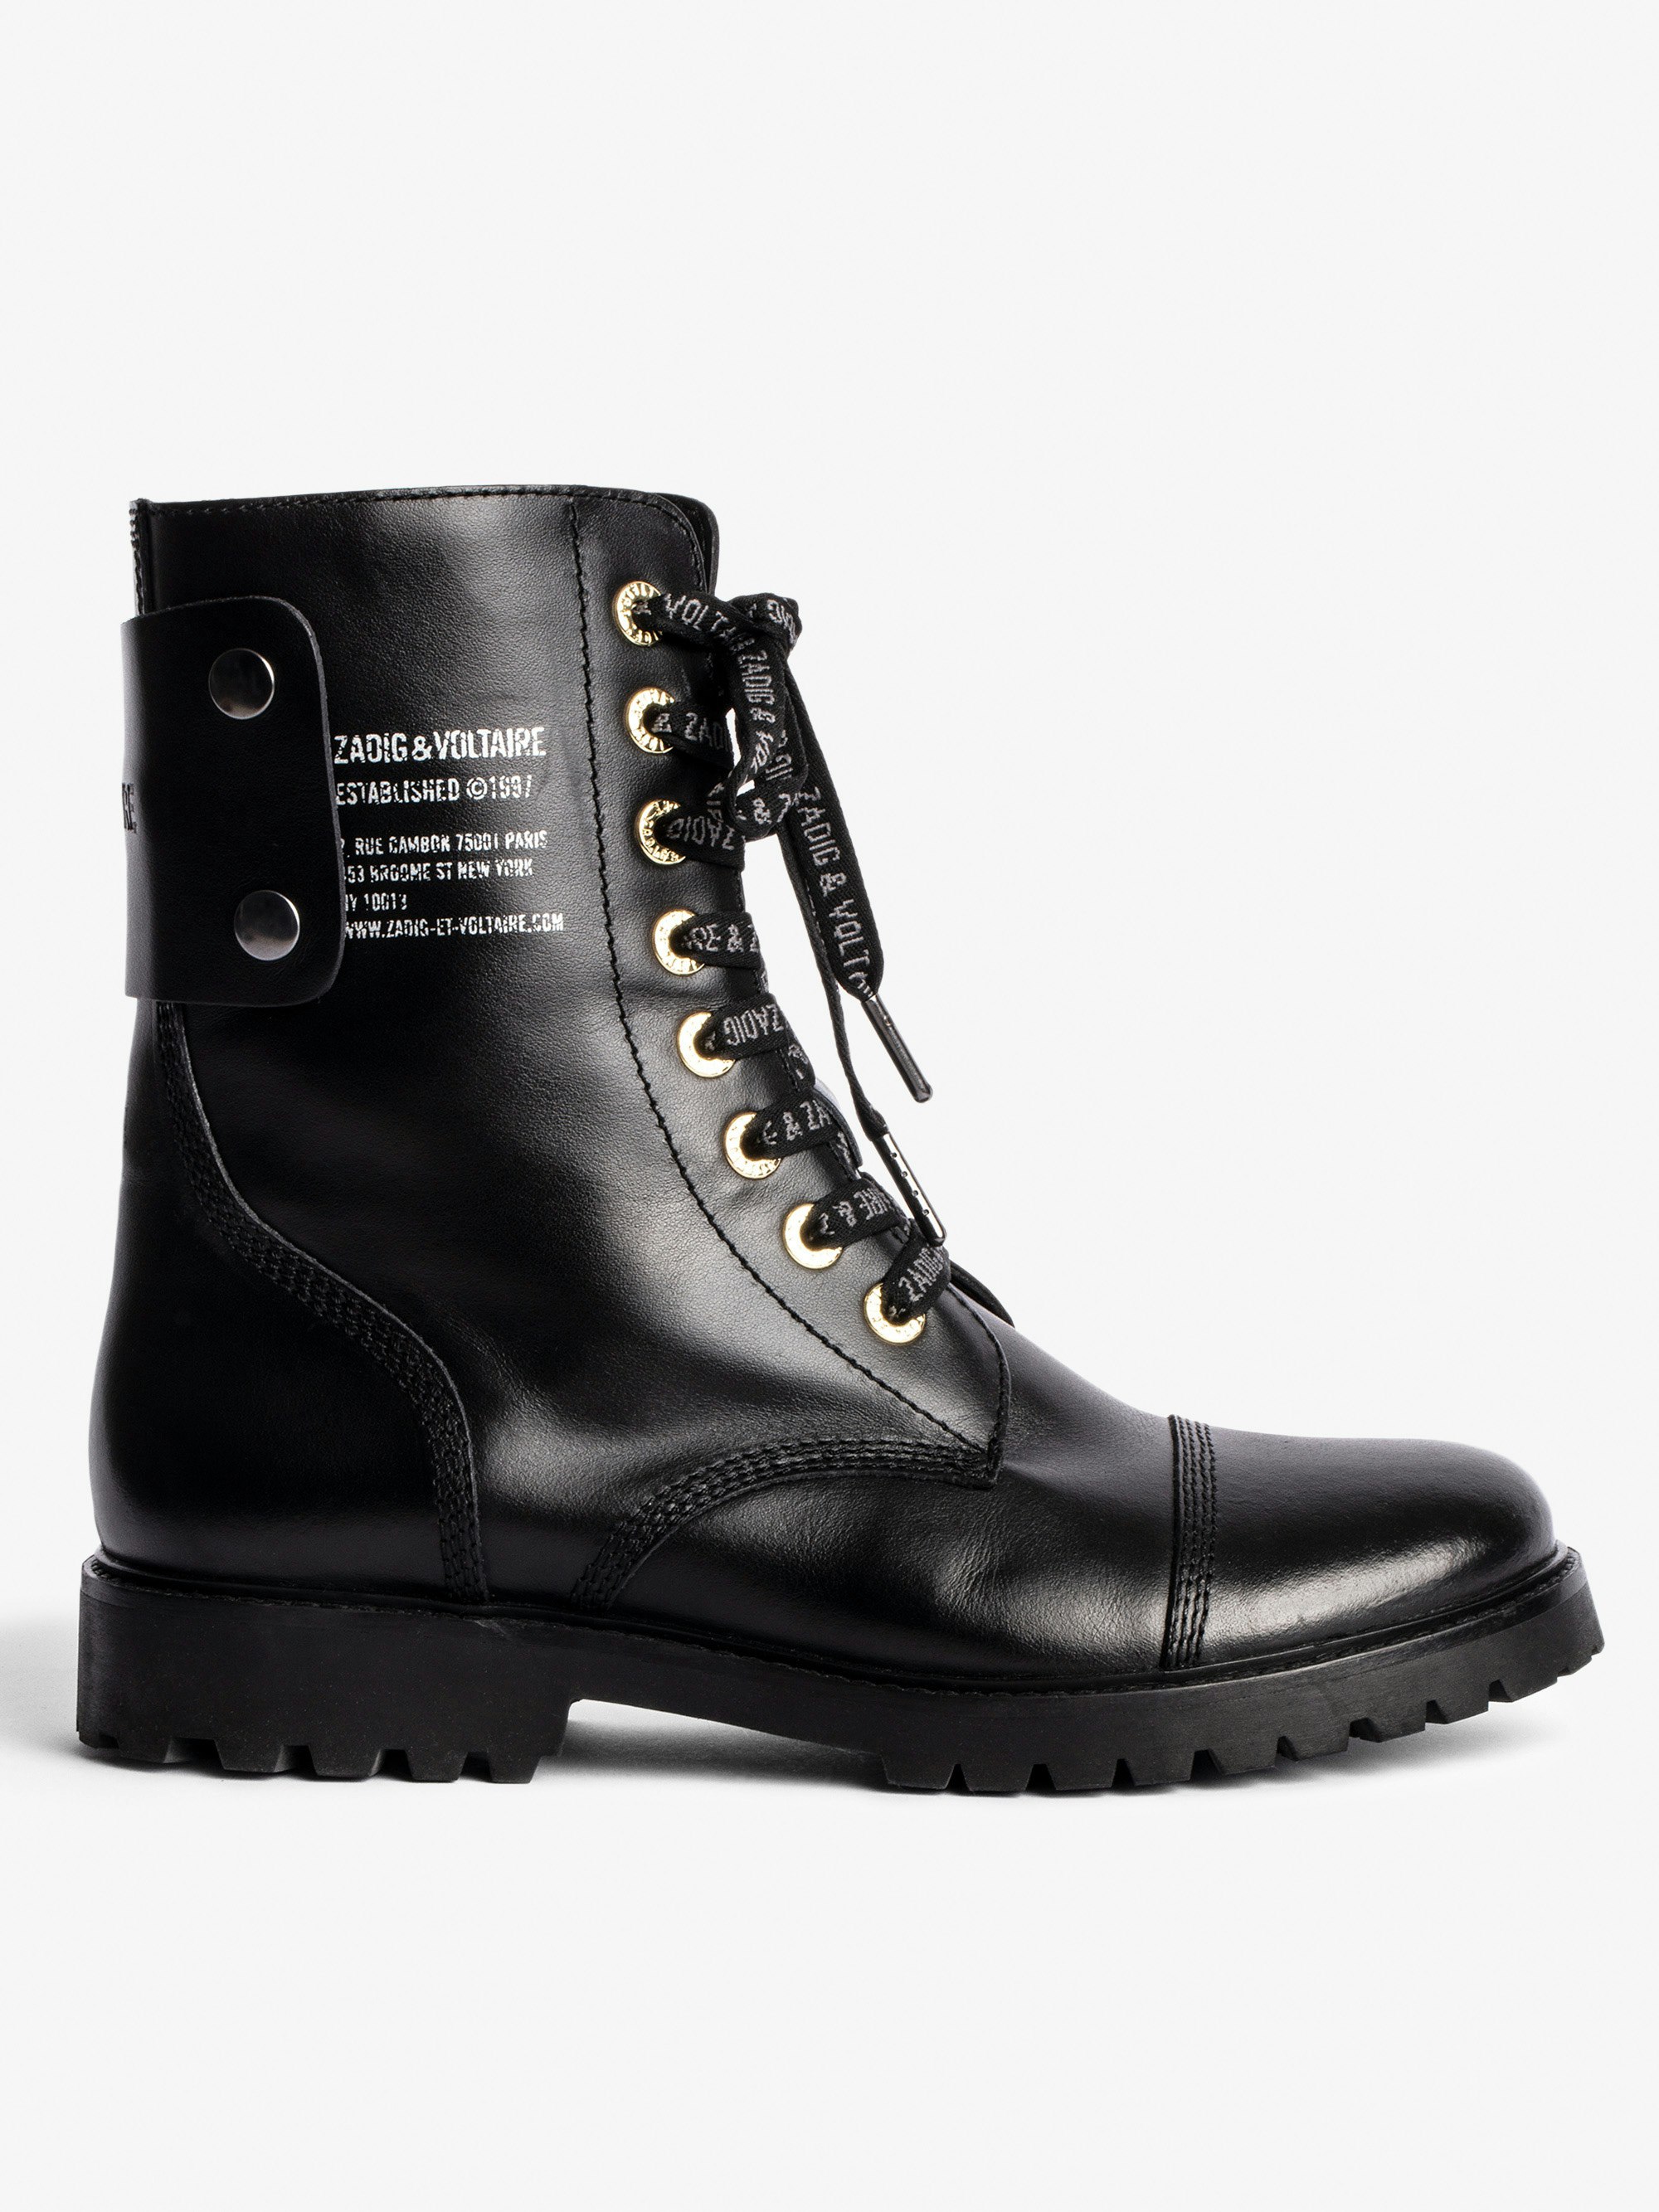 Joe Boots - Women's black leather boot